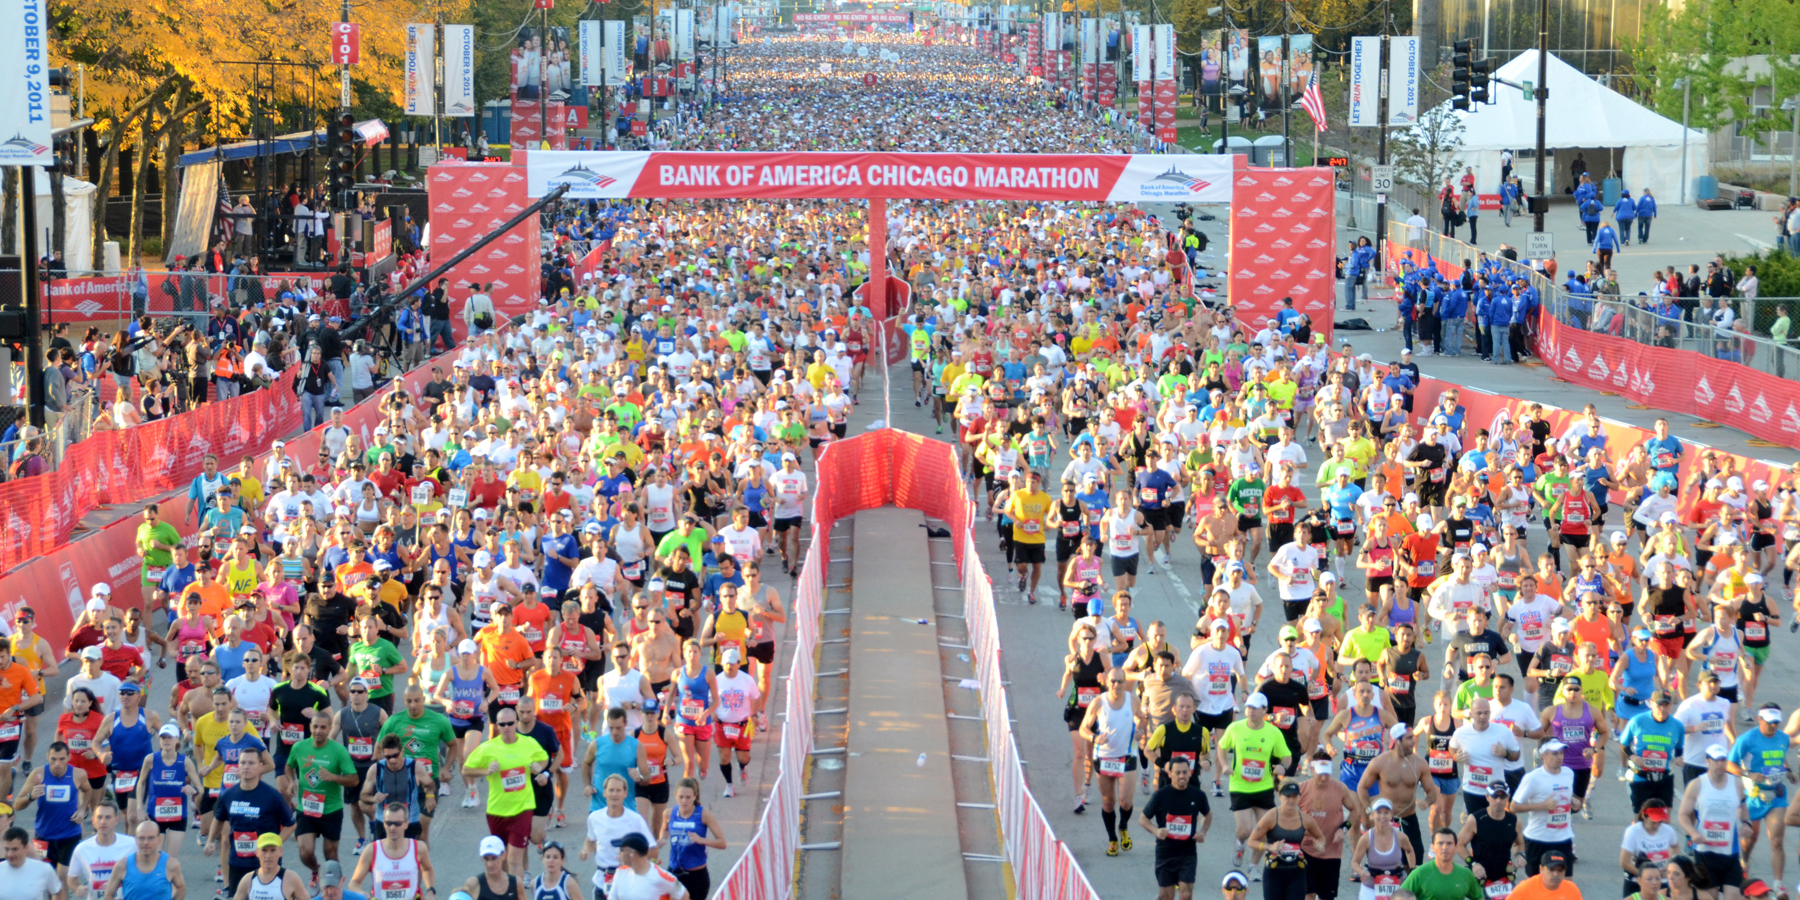 Chicago Marathon 2022 Live: Stream Online and Free TV Coverage